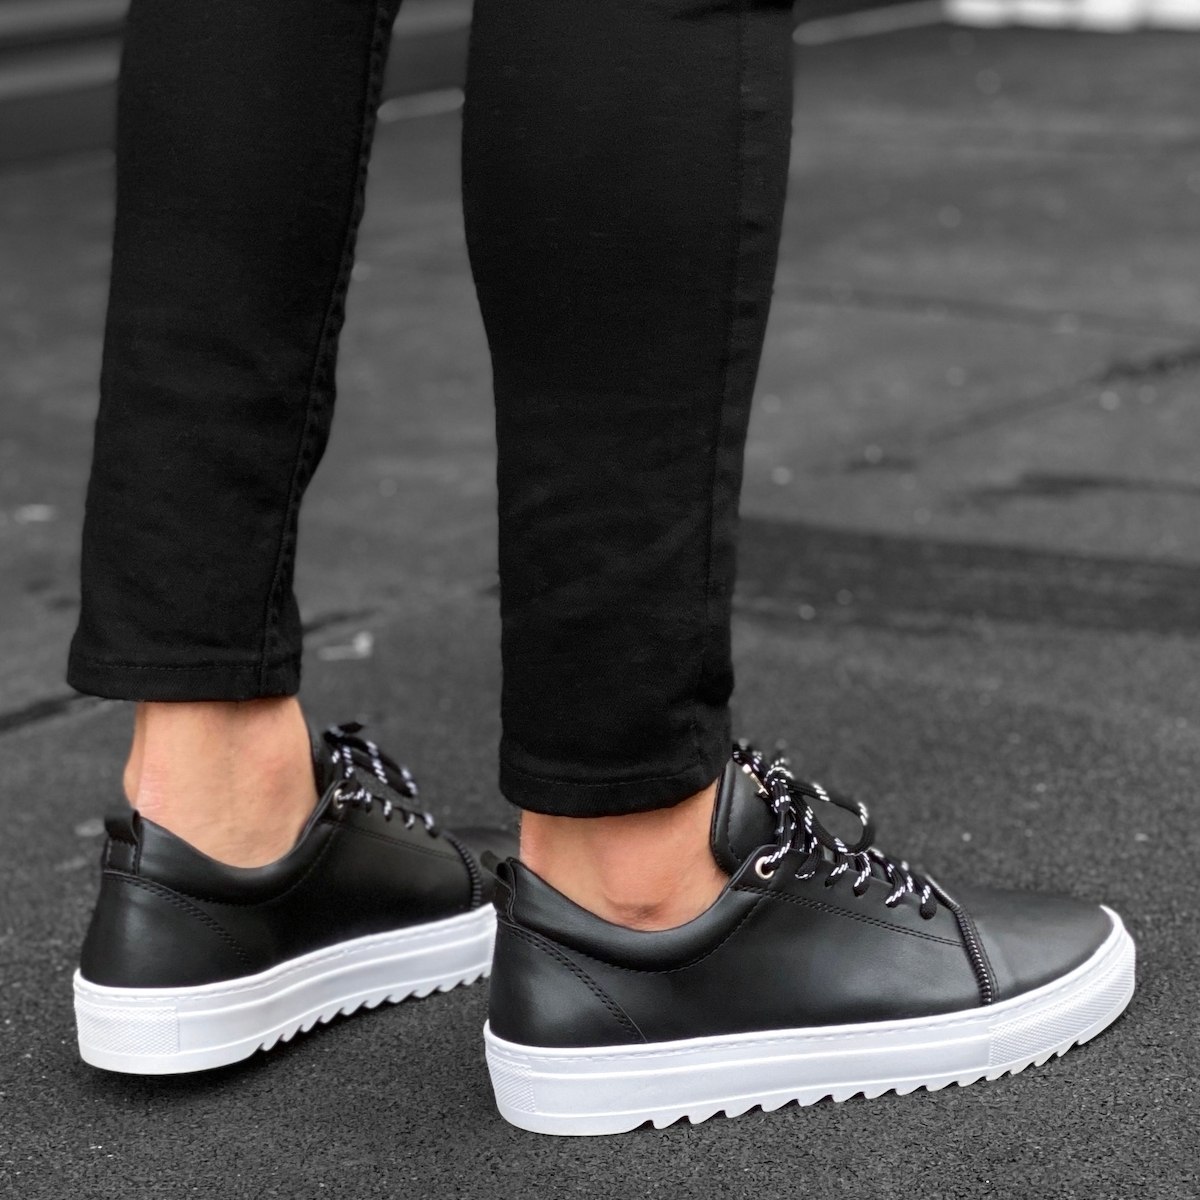 Men’s Low Top Designer Sneakers Shoes Black